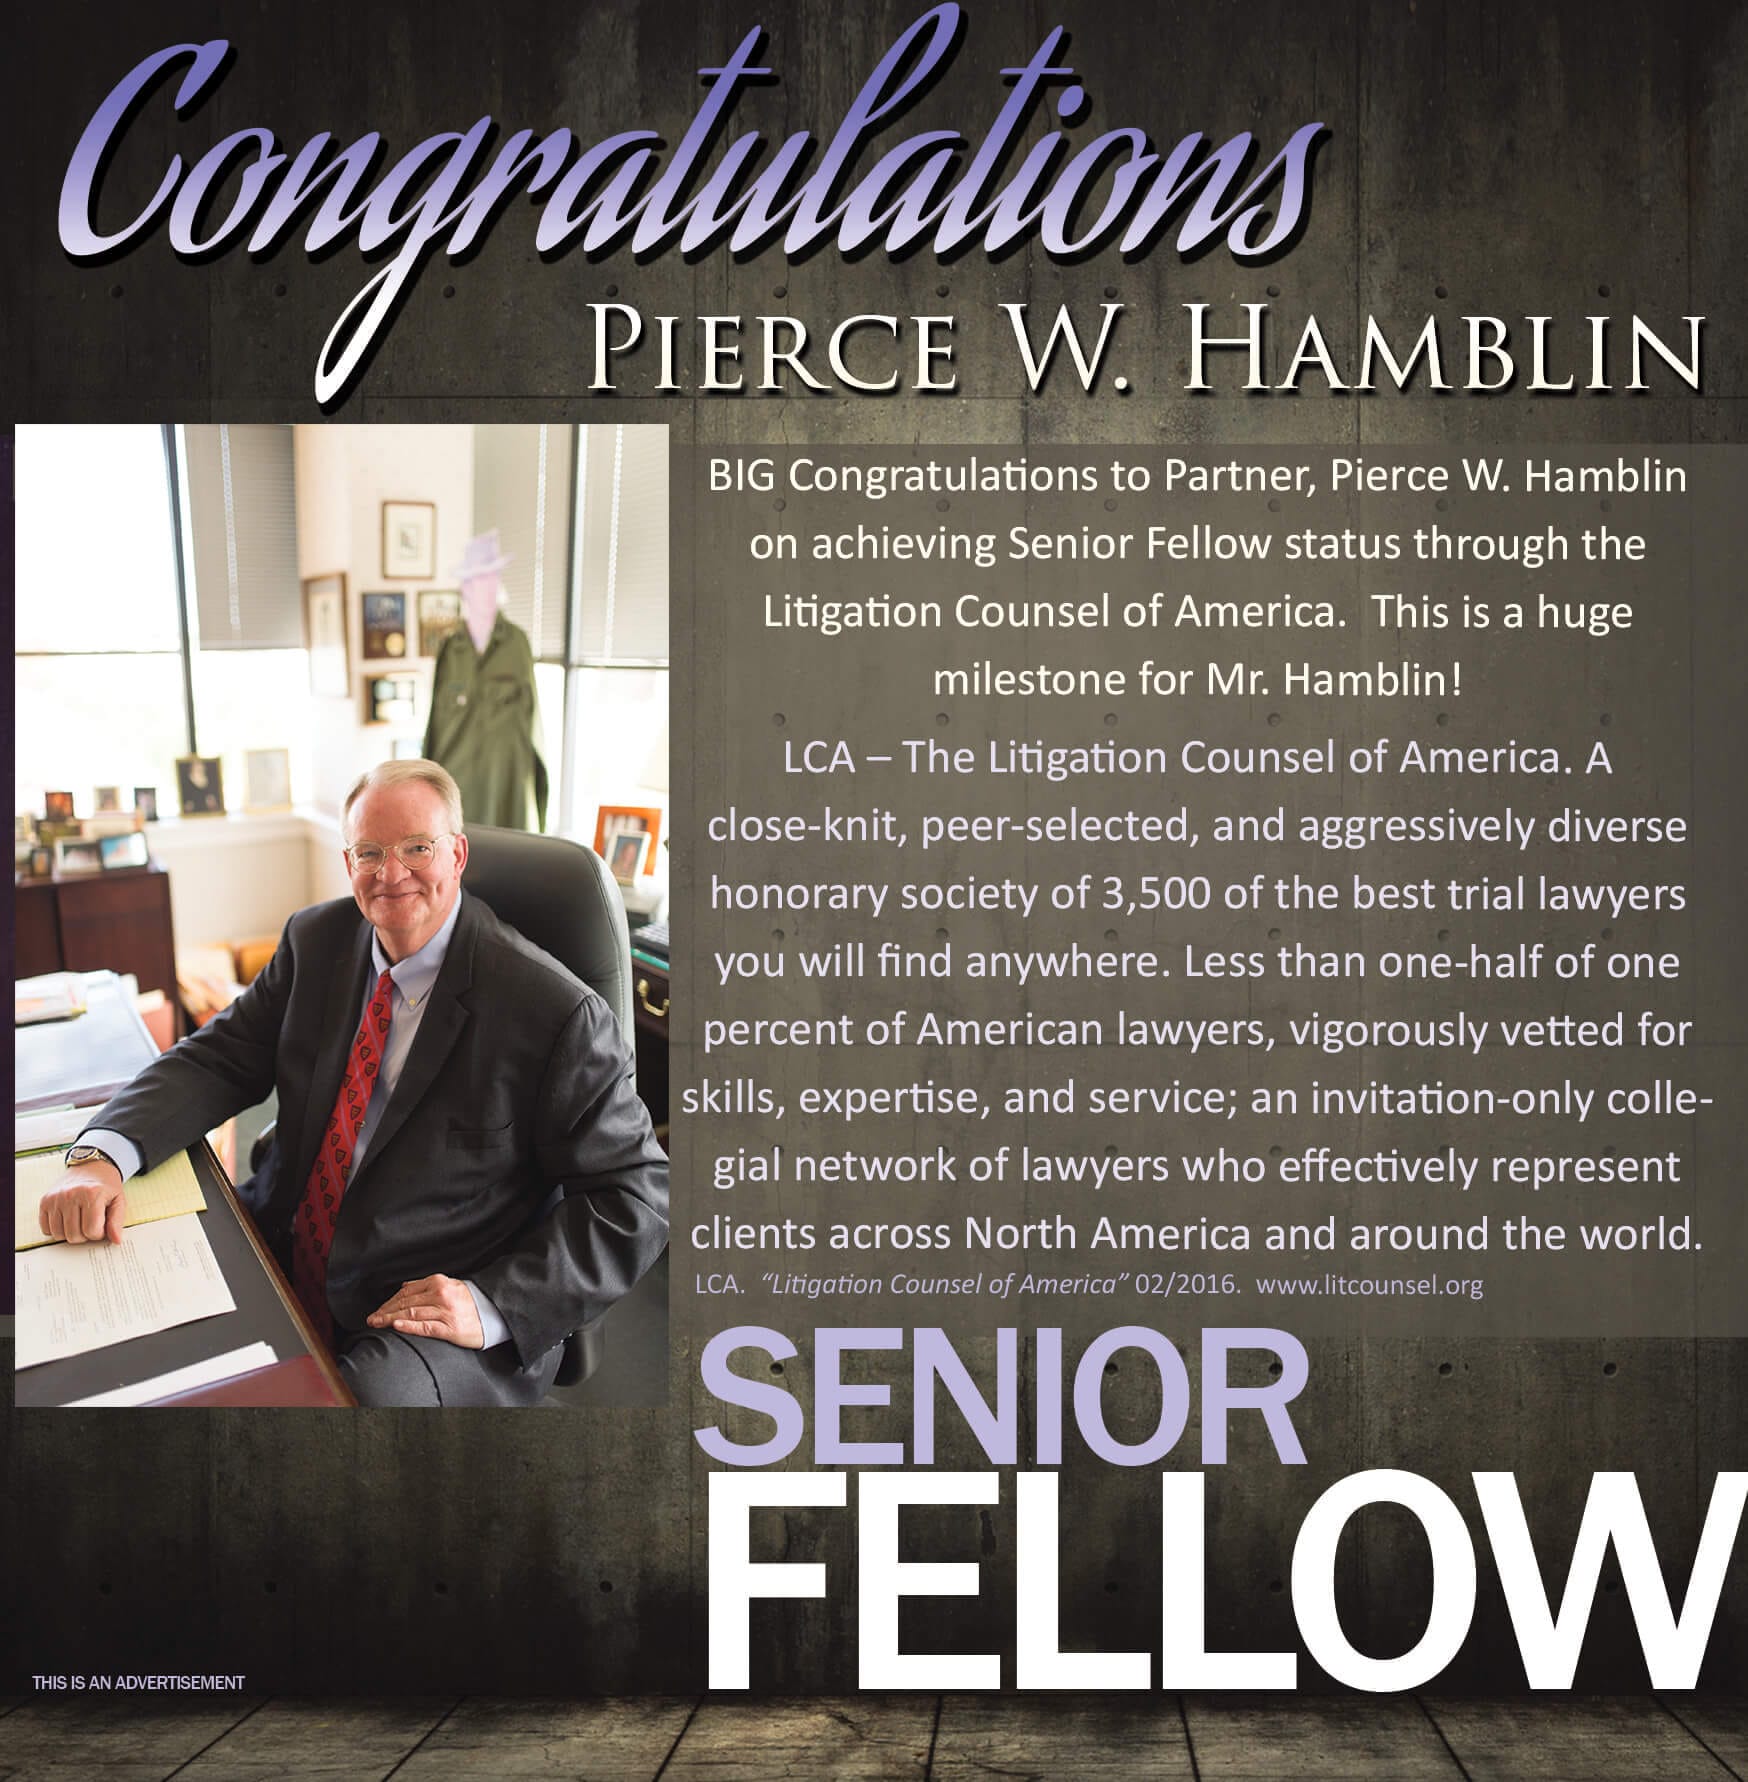 Congratulations Pierce W. Hamblin